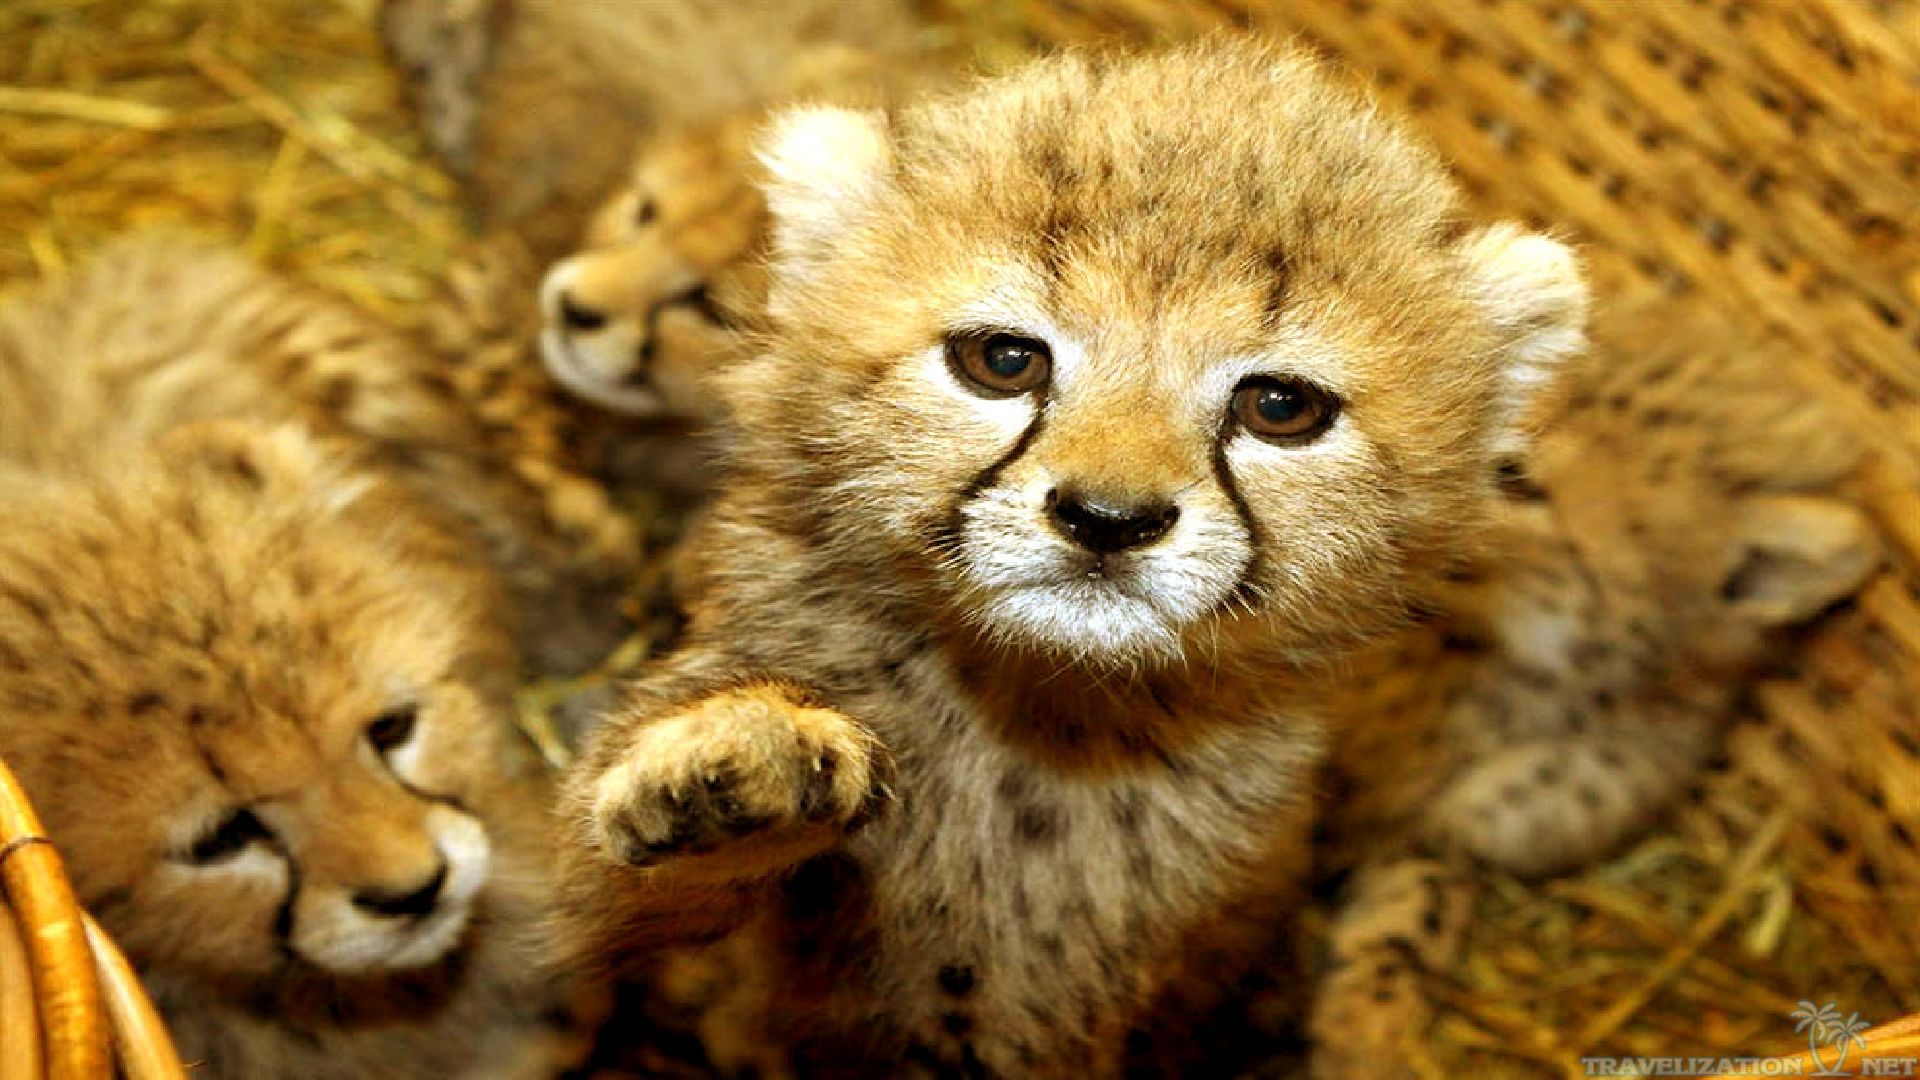 Pictures Of Cute Baby Animals   Desktop Backgrounds